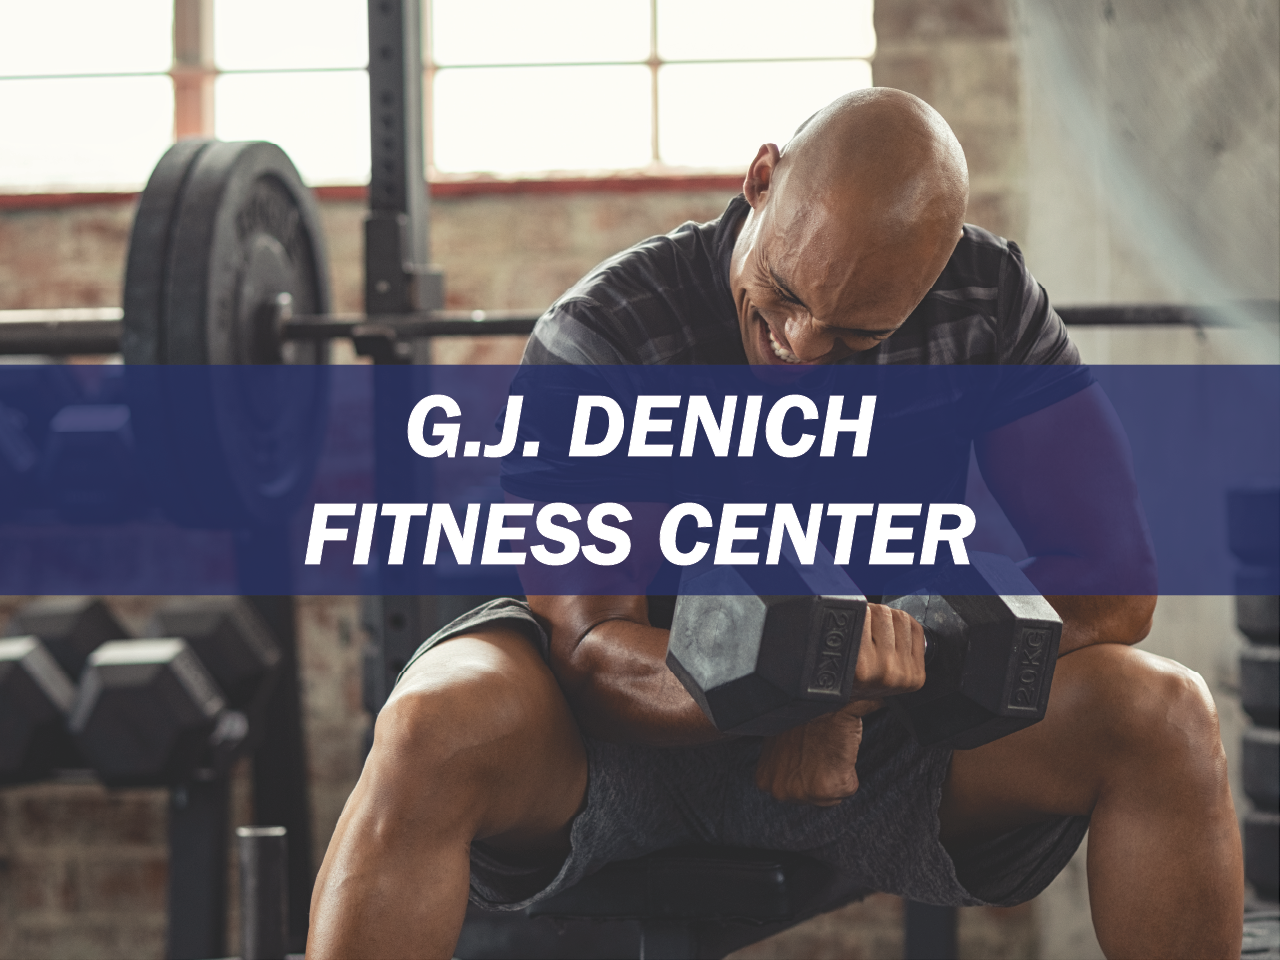 G.J. Denich Fitness Center